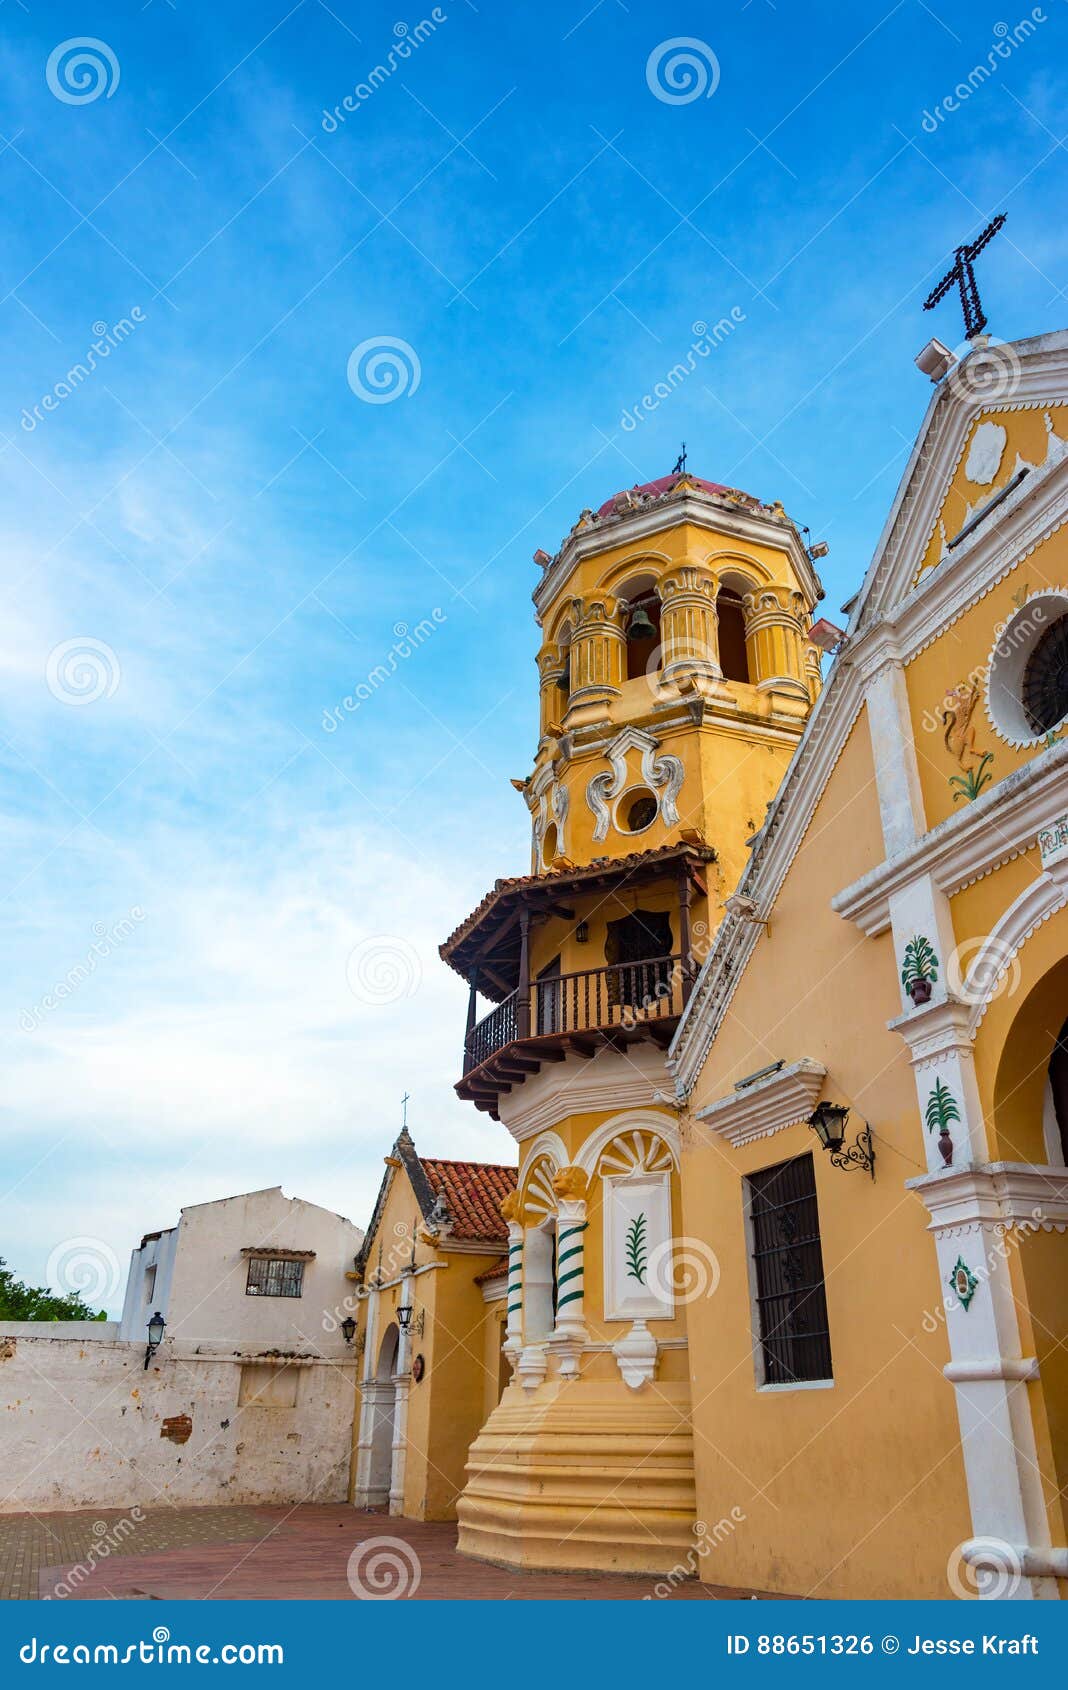 santa barbara church in mompox, colombia